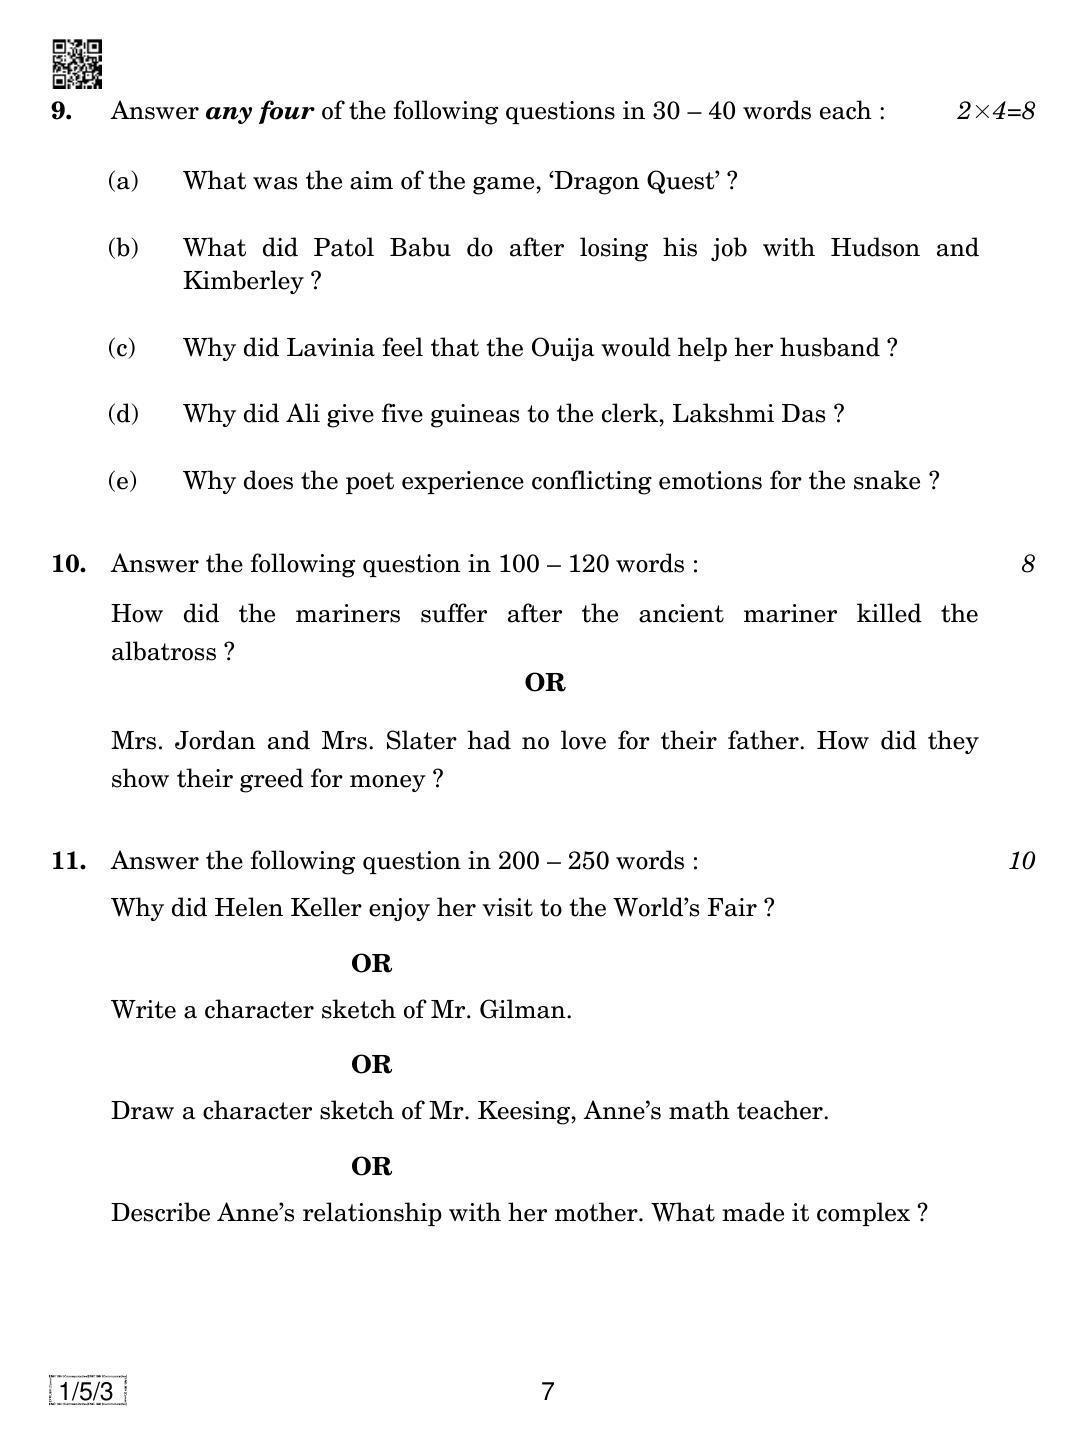 CBSE Class 10 1-5-3 ENGLISH COMMUNICATIVE 2019 Question Paper - Page 7